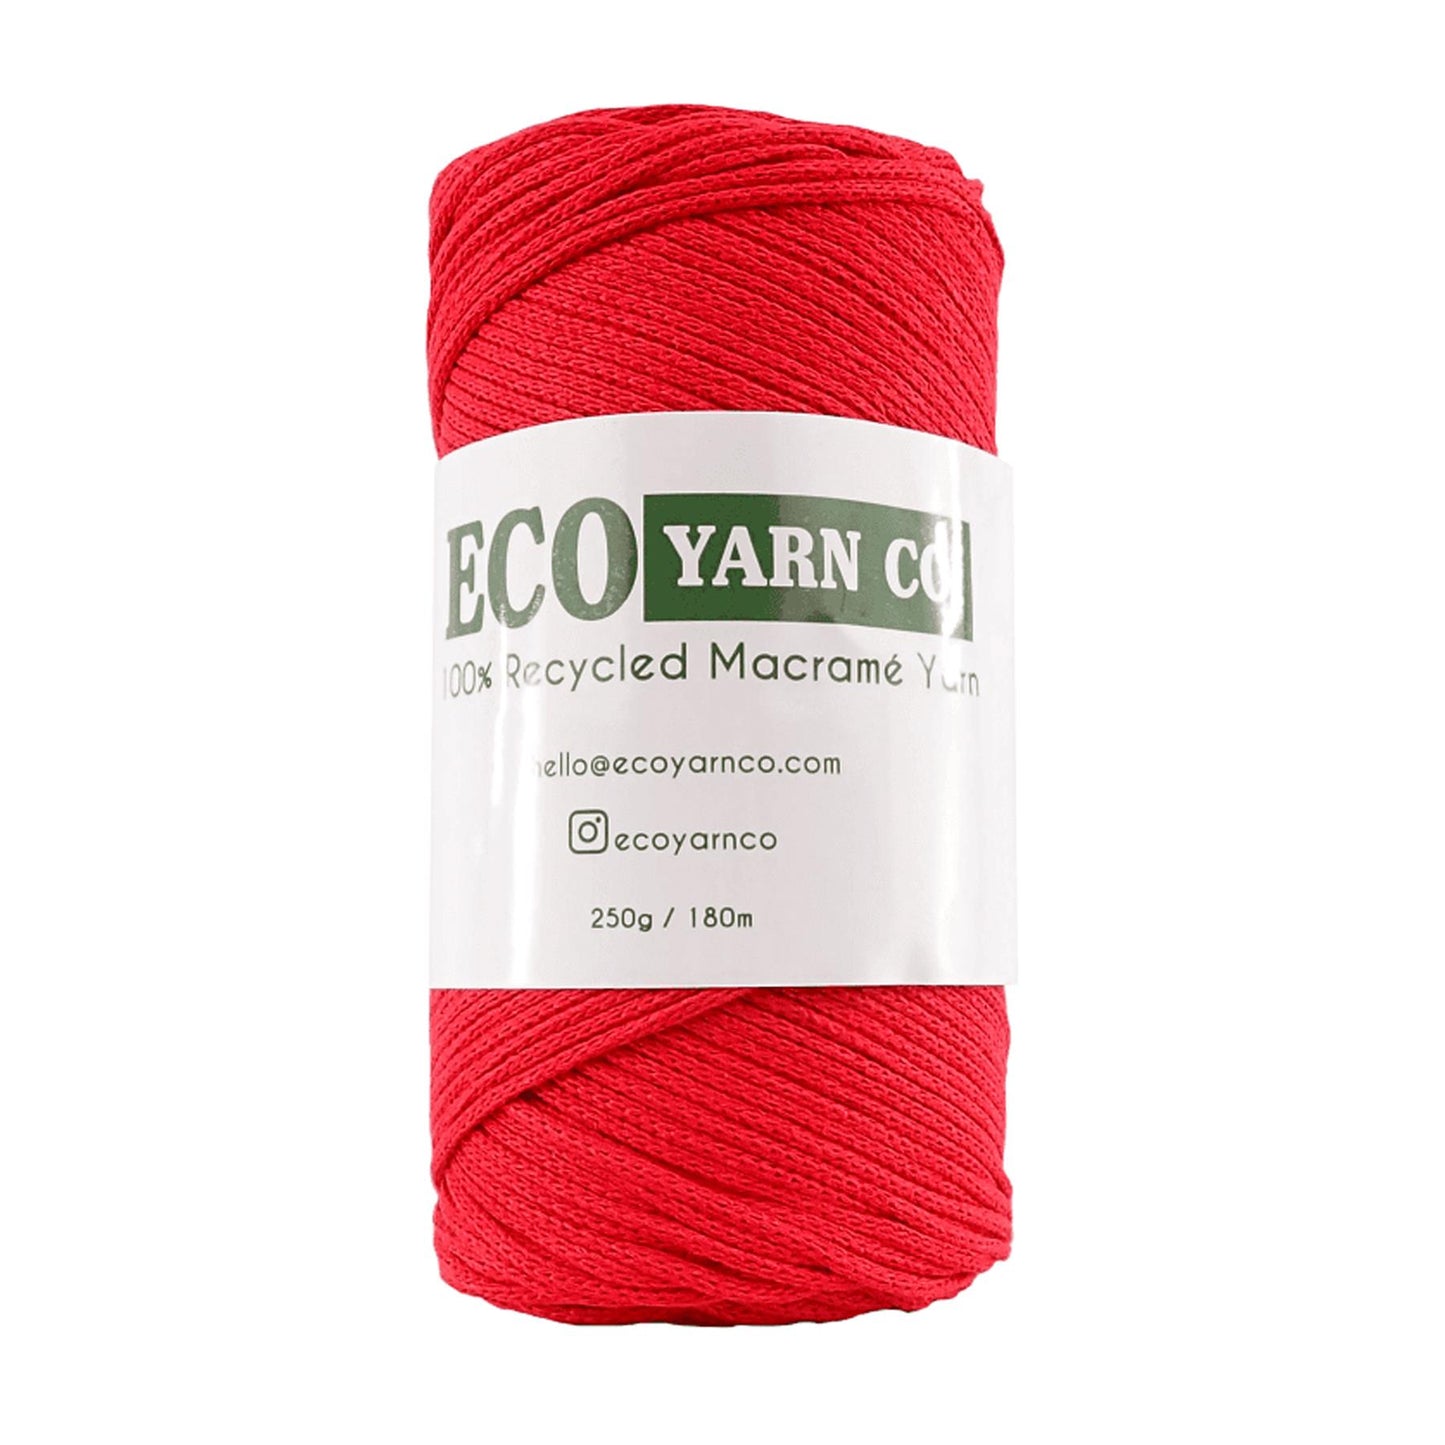 [Eco Yarn Co] Red Cotton/Polyester Macrame Yarn - 180M, 250g